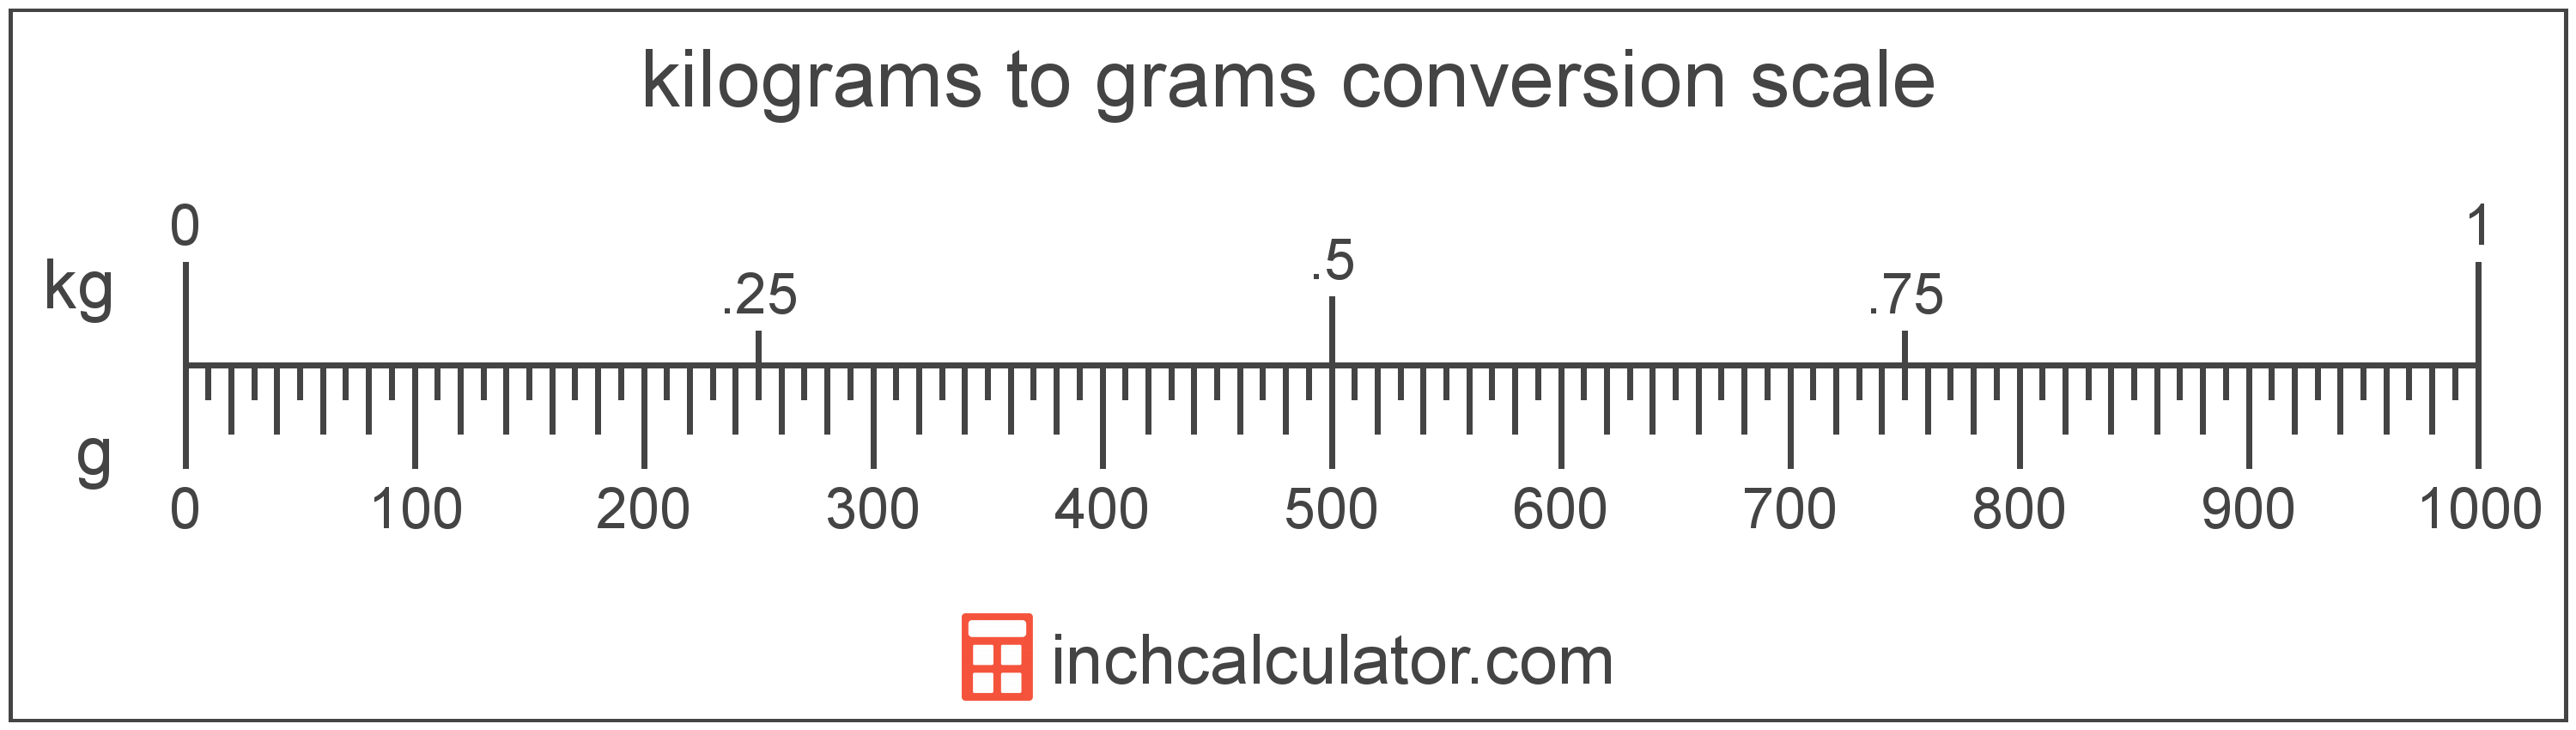 kilograms-to-grams-conversion-kg-to-g-inch-calculator